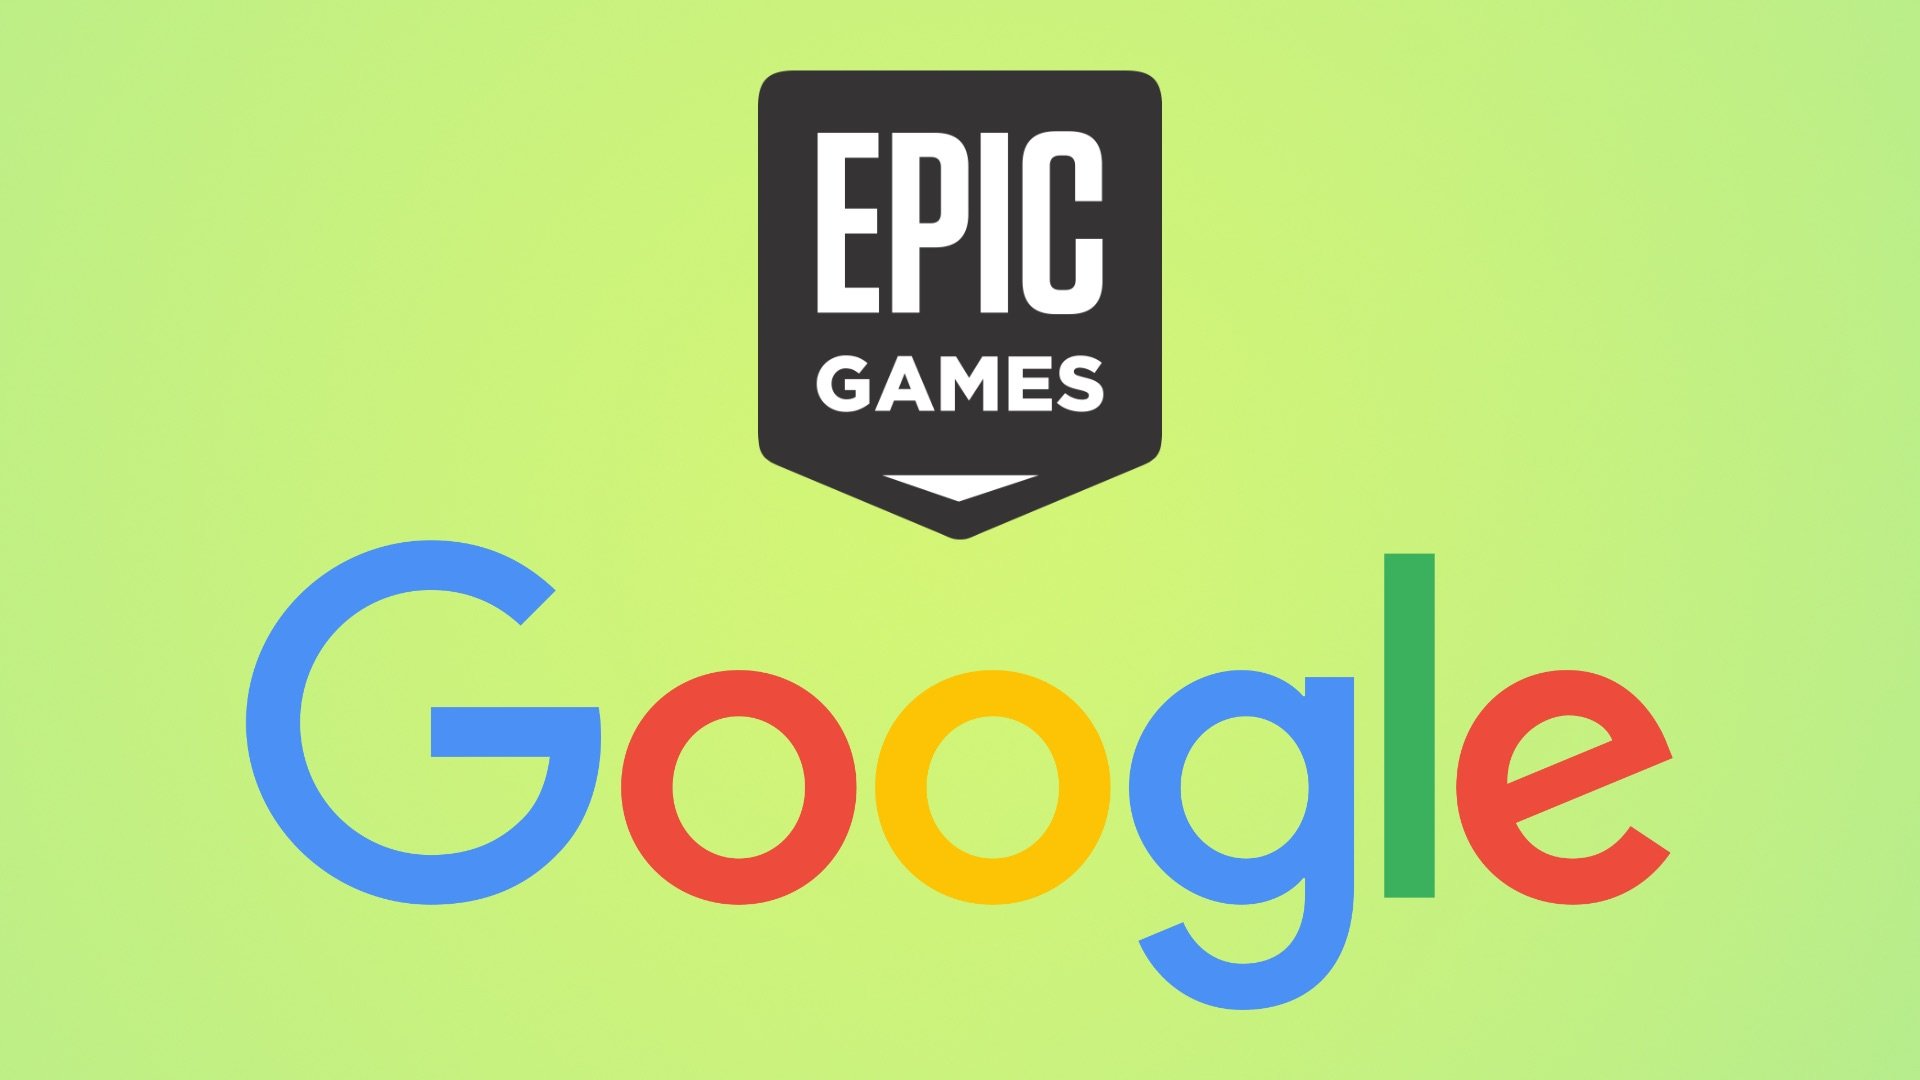 Google has illegal app store monopoly, Epic Games lawsuit finds